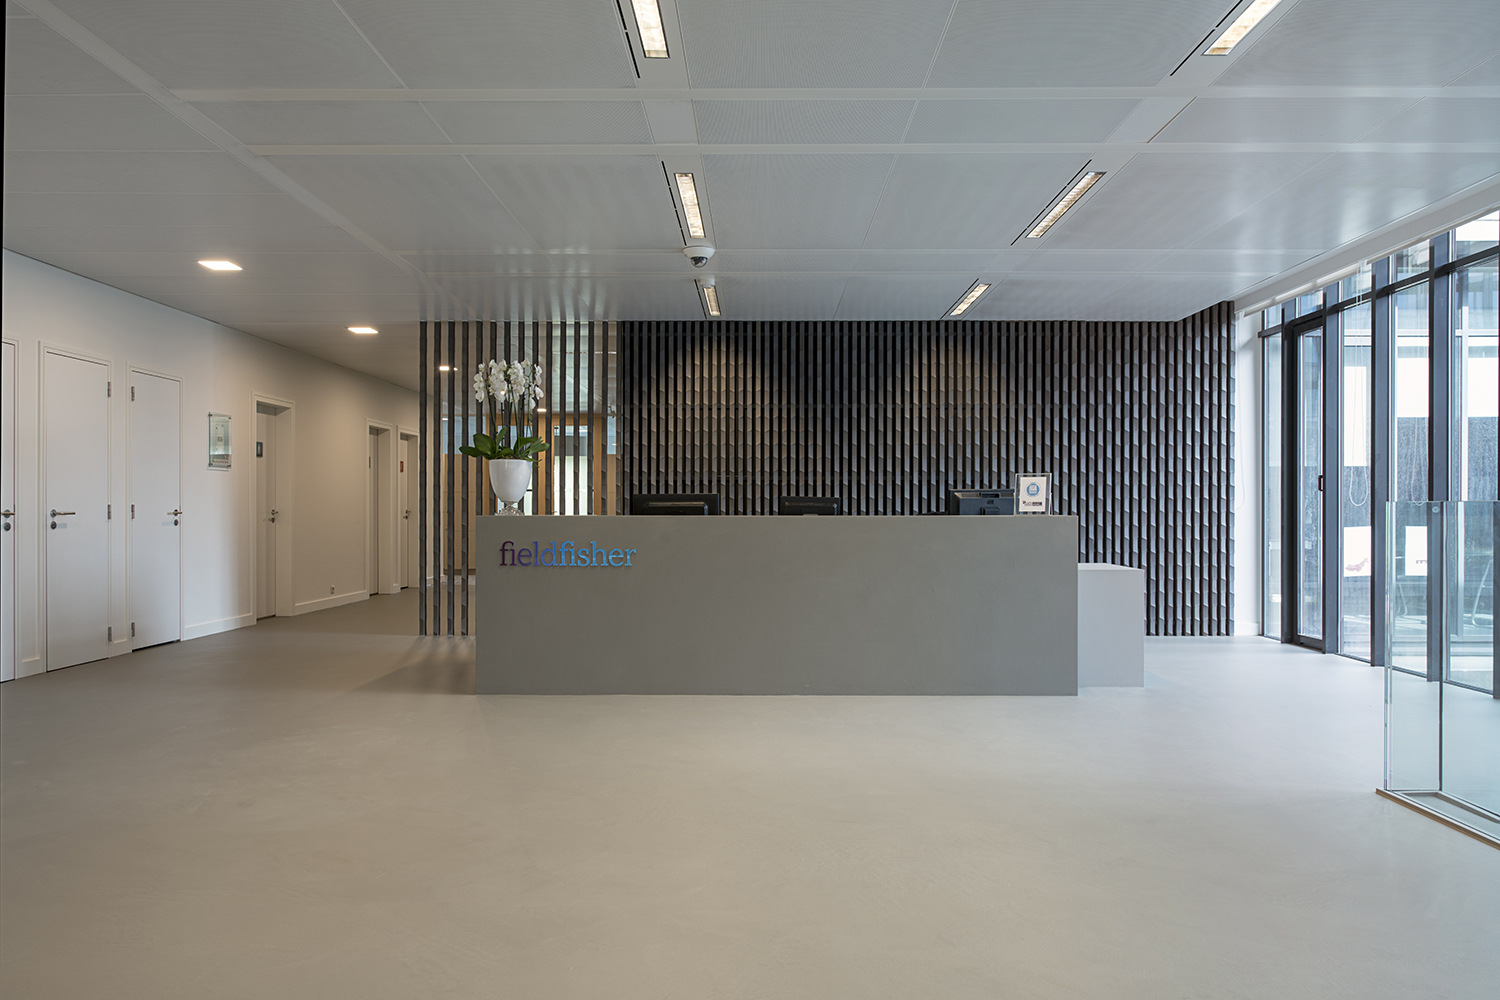 Fieldfisher办公室-布鲁塞尔|ART-Arrakis | 建筑室内设计的创新与灵感